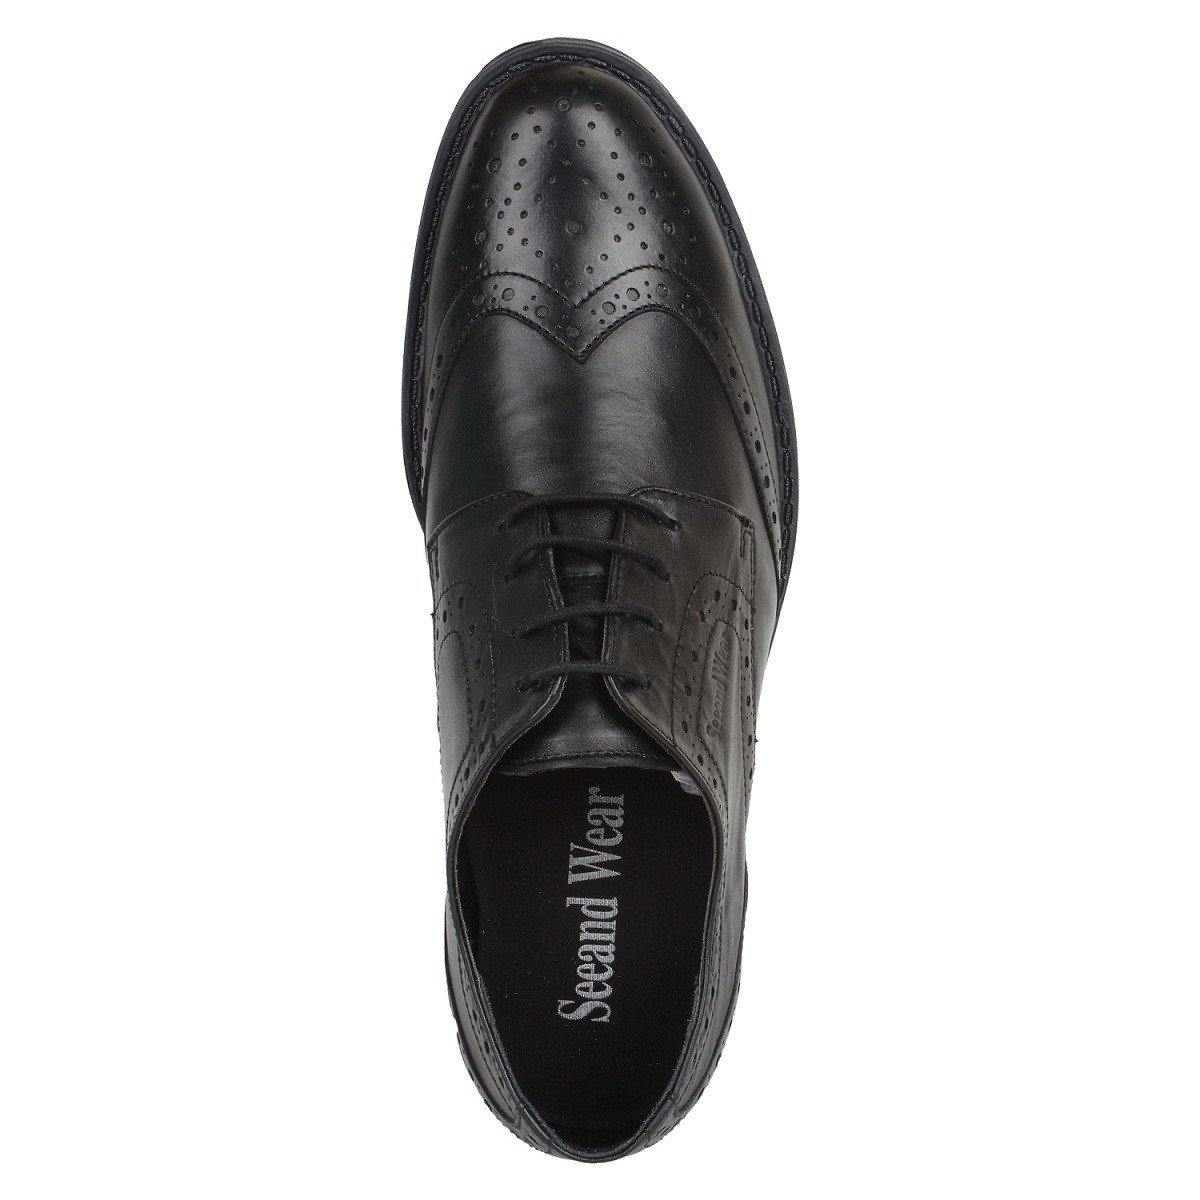 SeeandWear Formal Brogue Shoes For Men - SeeandWear